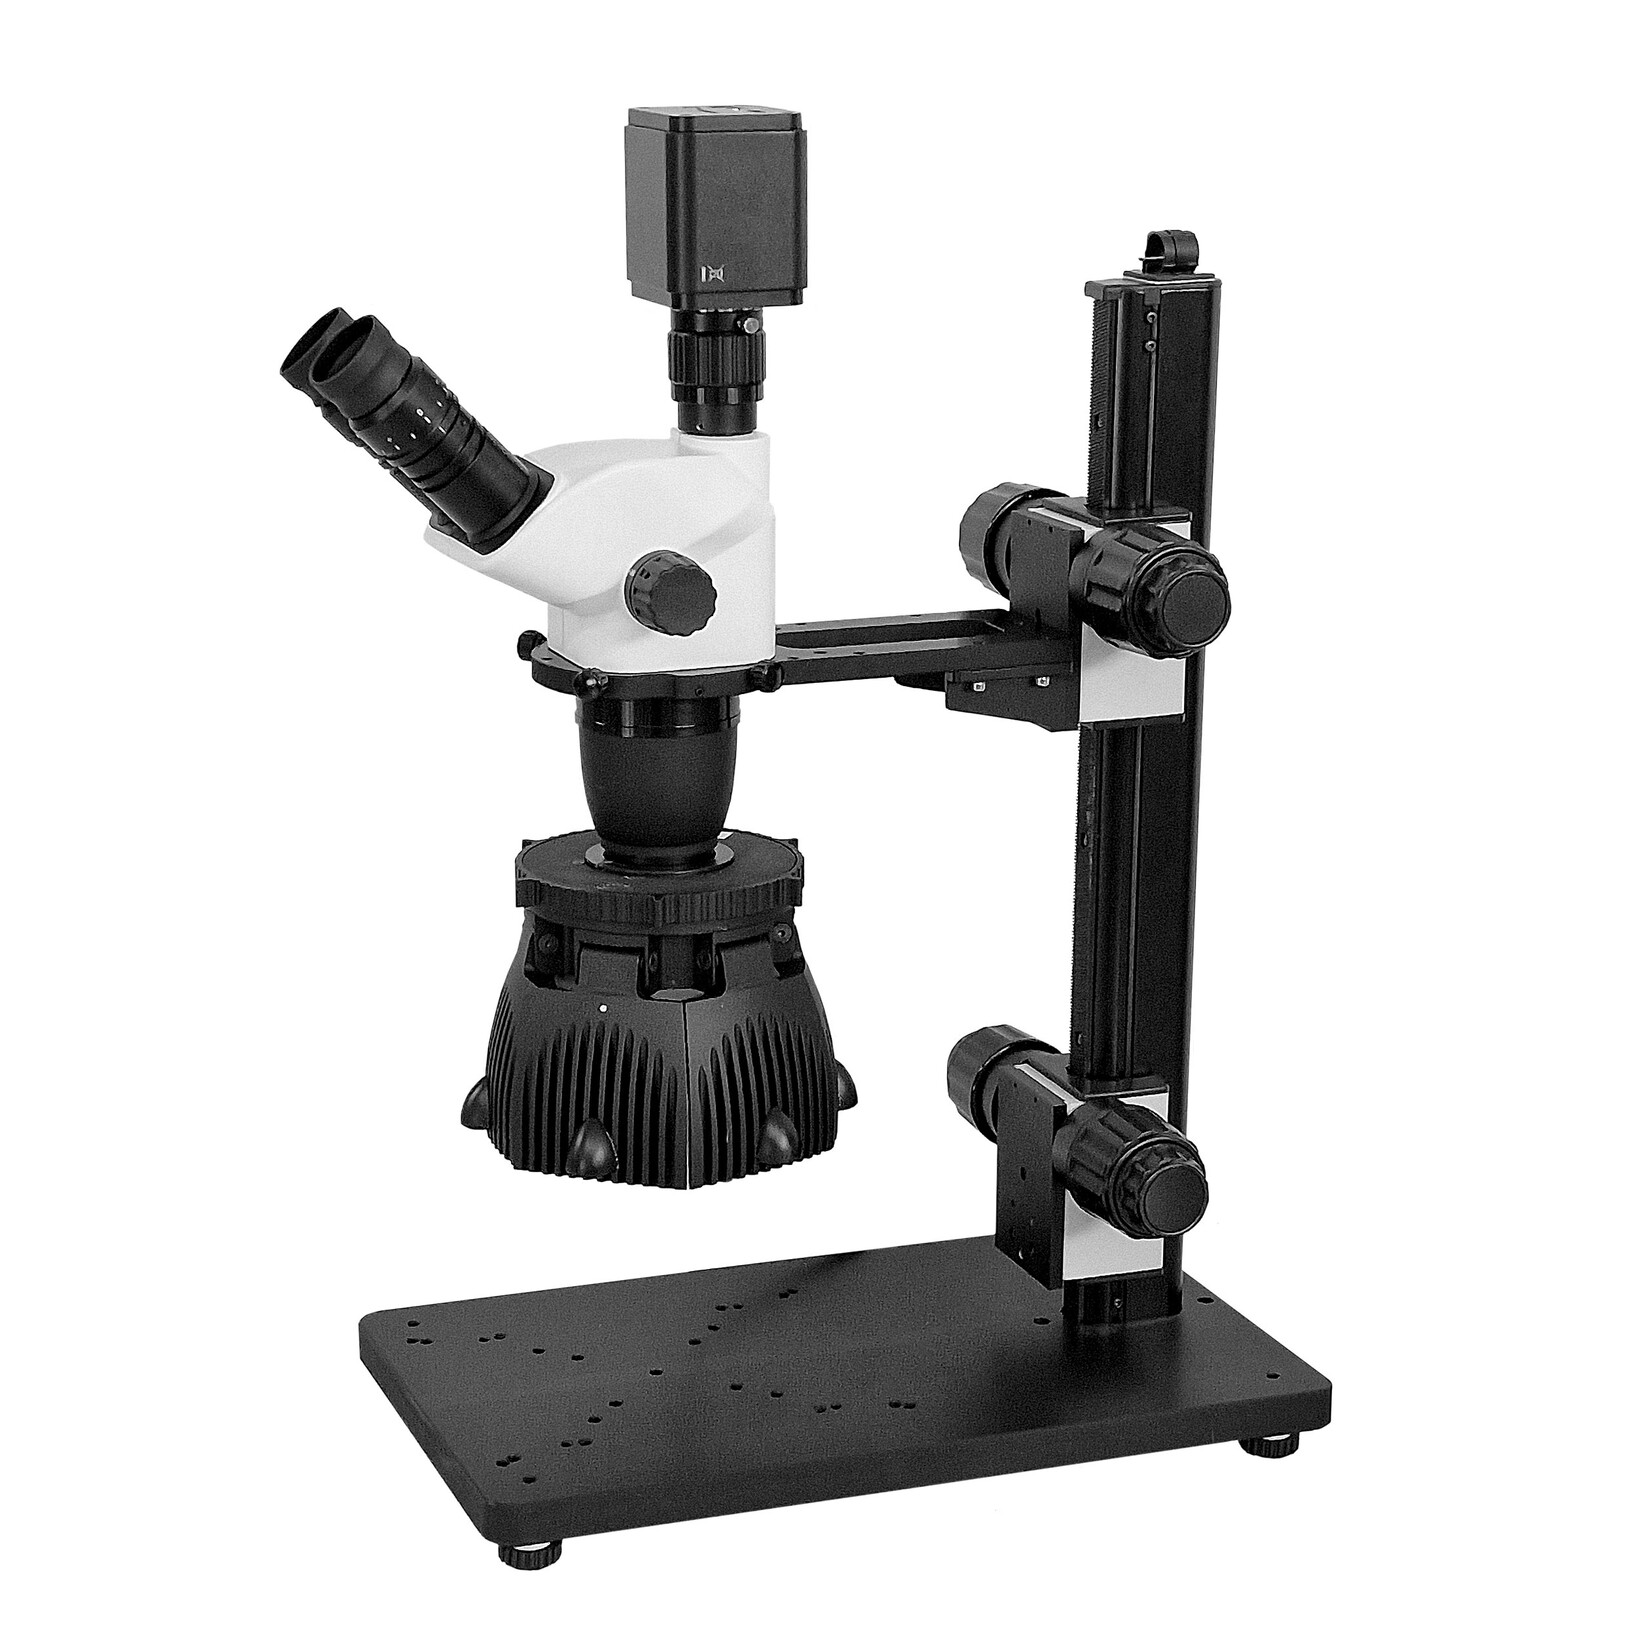 KITO-NEXIUS-HDMI - the stereo microscope with additional HDMI camera